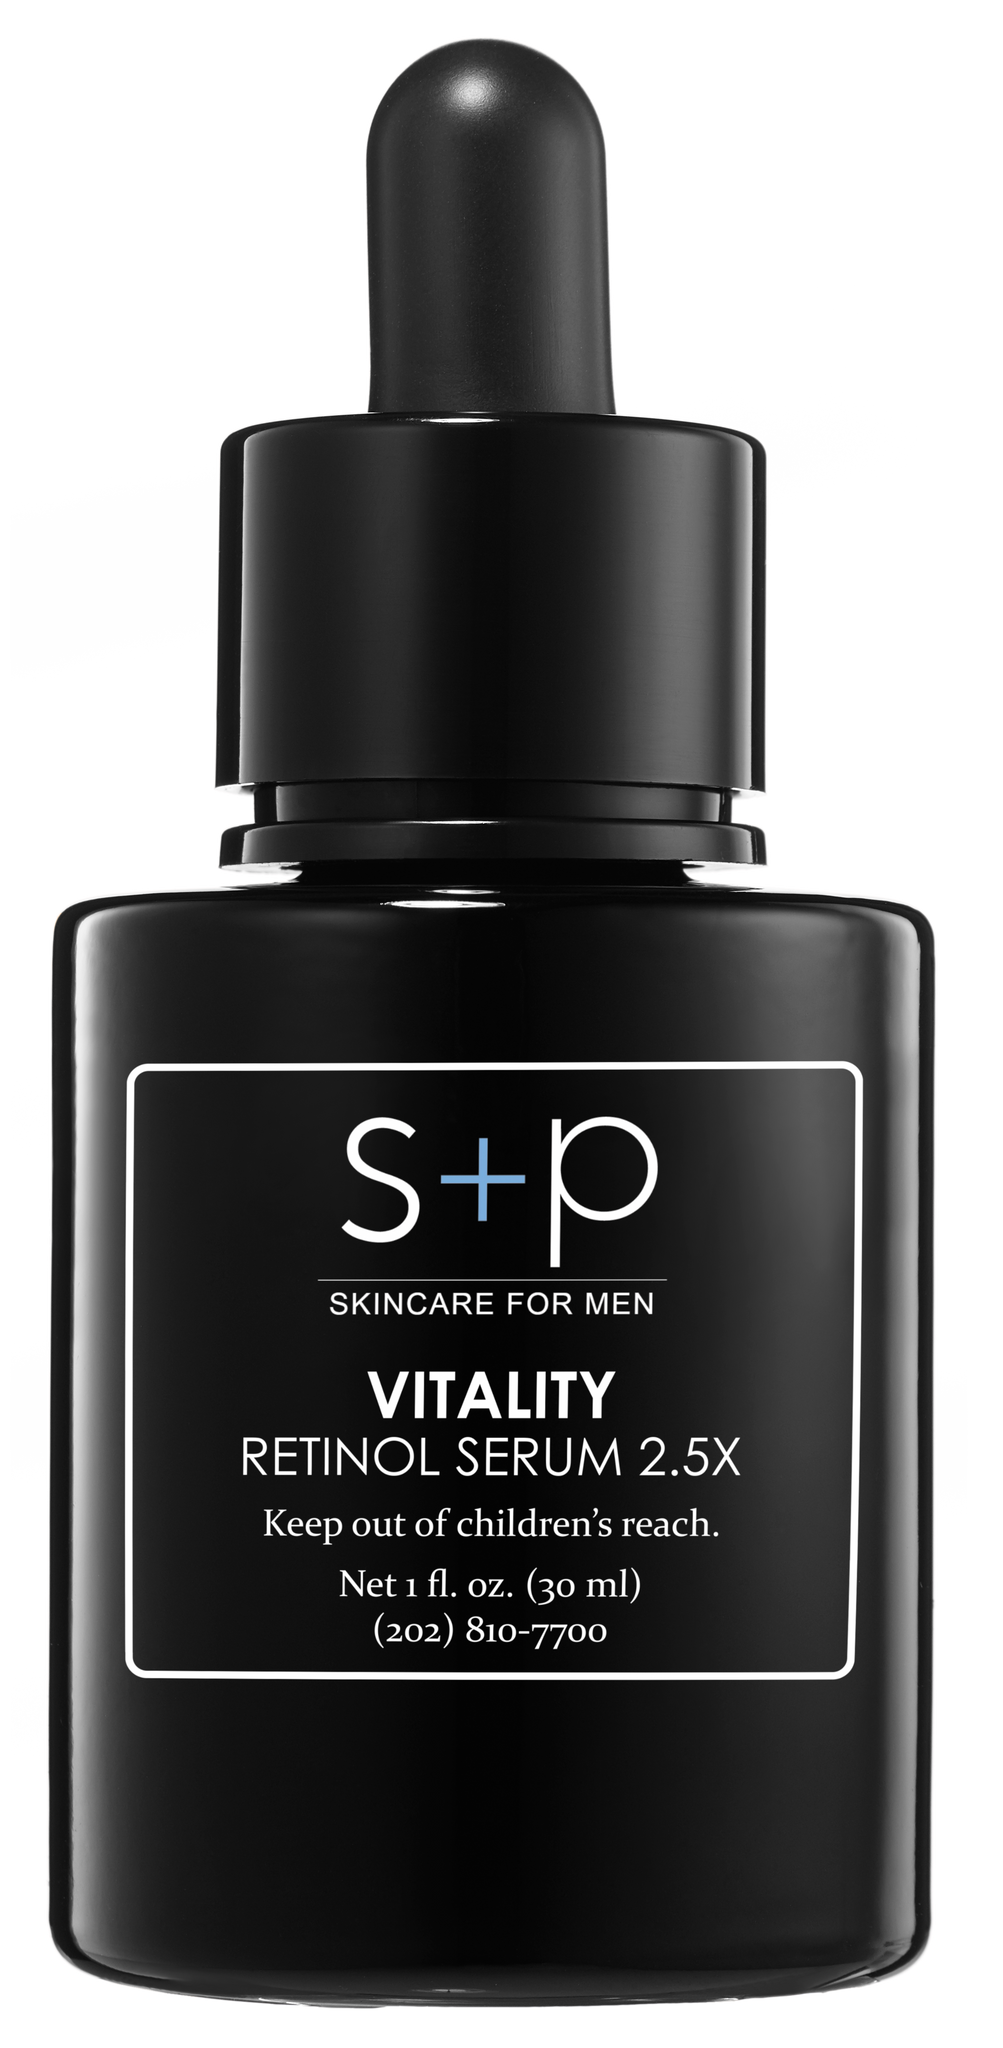 Skincare for men - Vitality Retinol Serum 2.5x